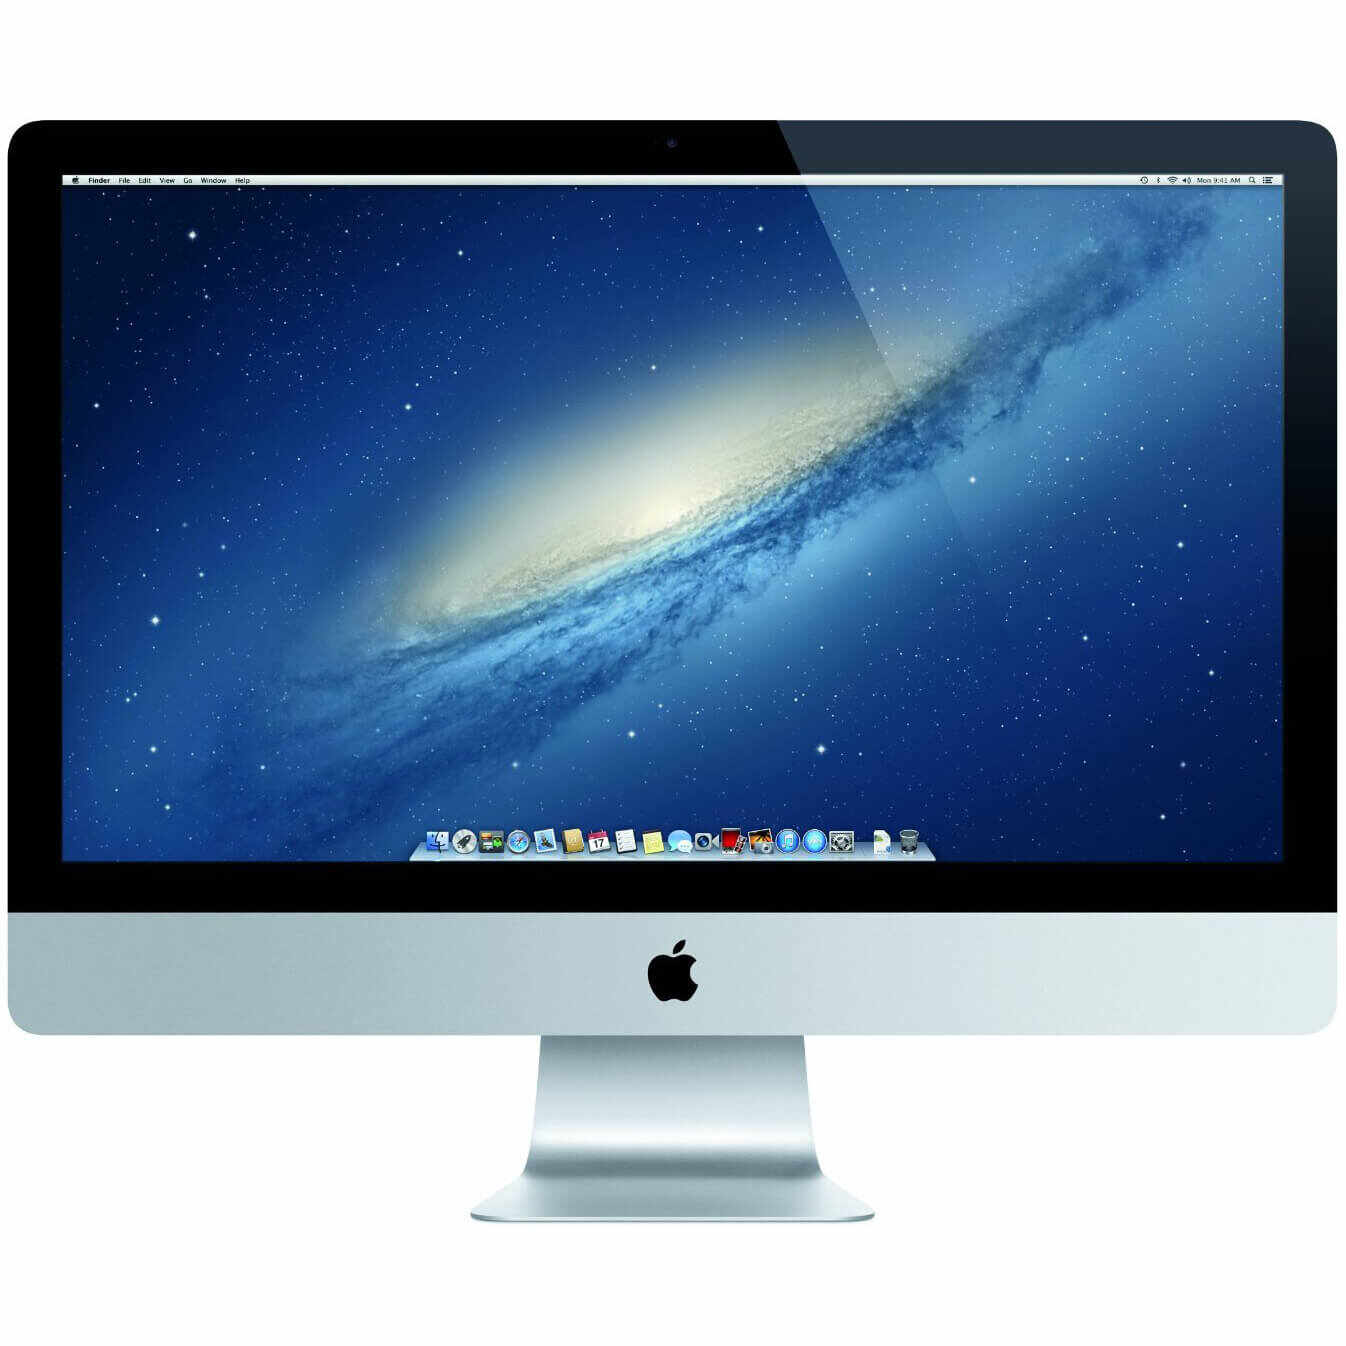 Sistem Desktop PC All-in-One Apple iMac Retina 5k, Intel Core i5, 8GB DDR3, HDD 2 TB, AMD Radeon R9 M395 2GB, Mac OS X